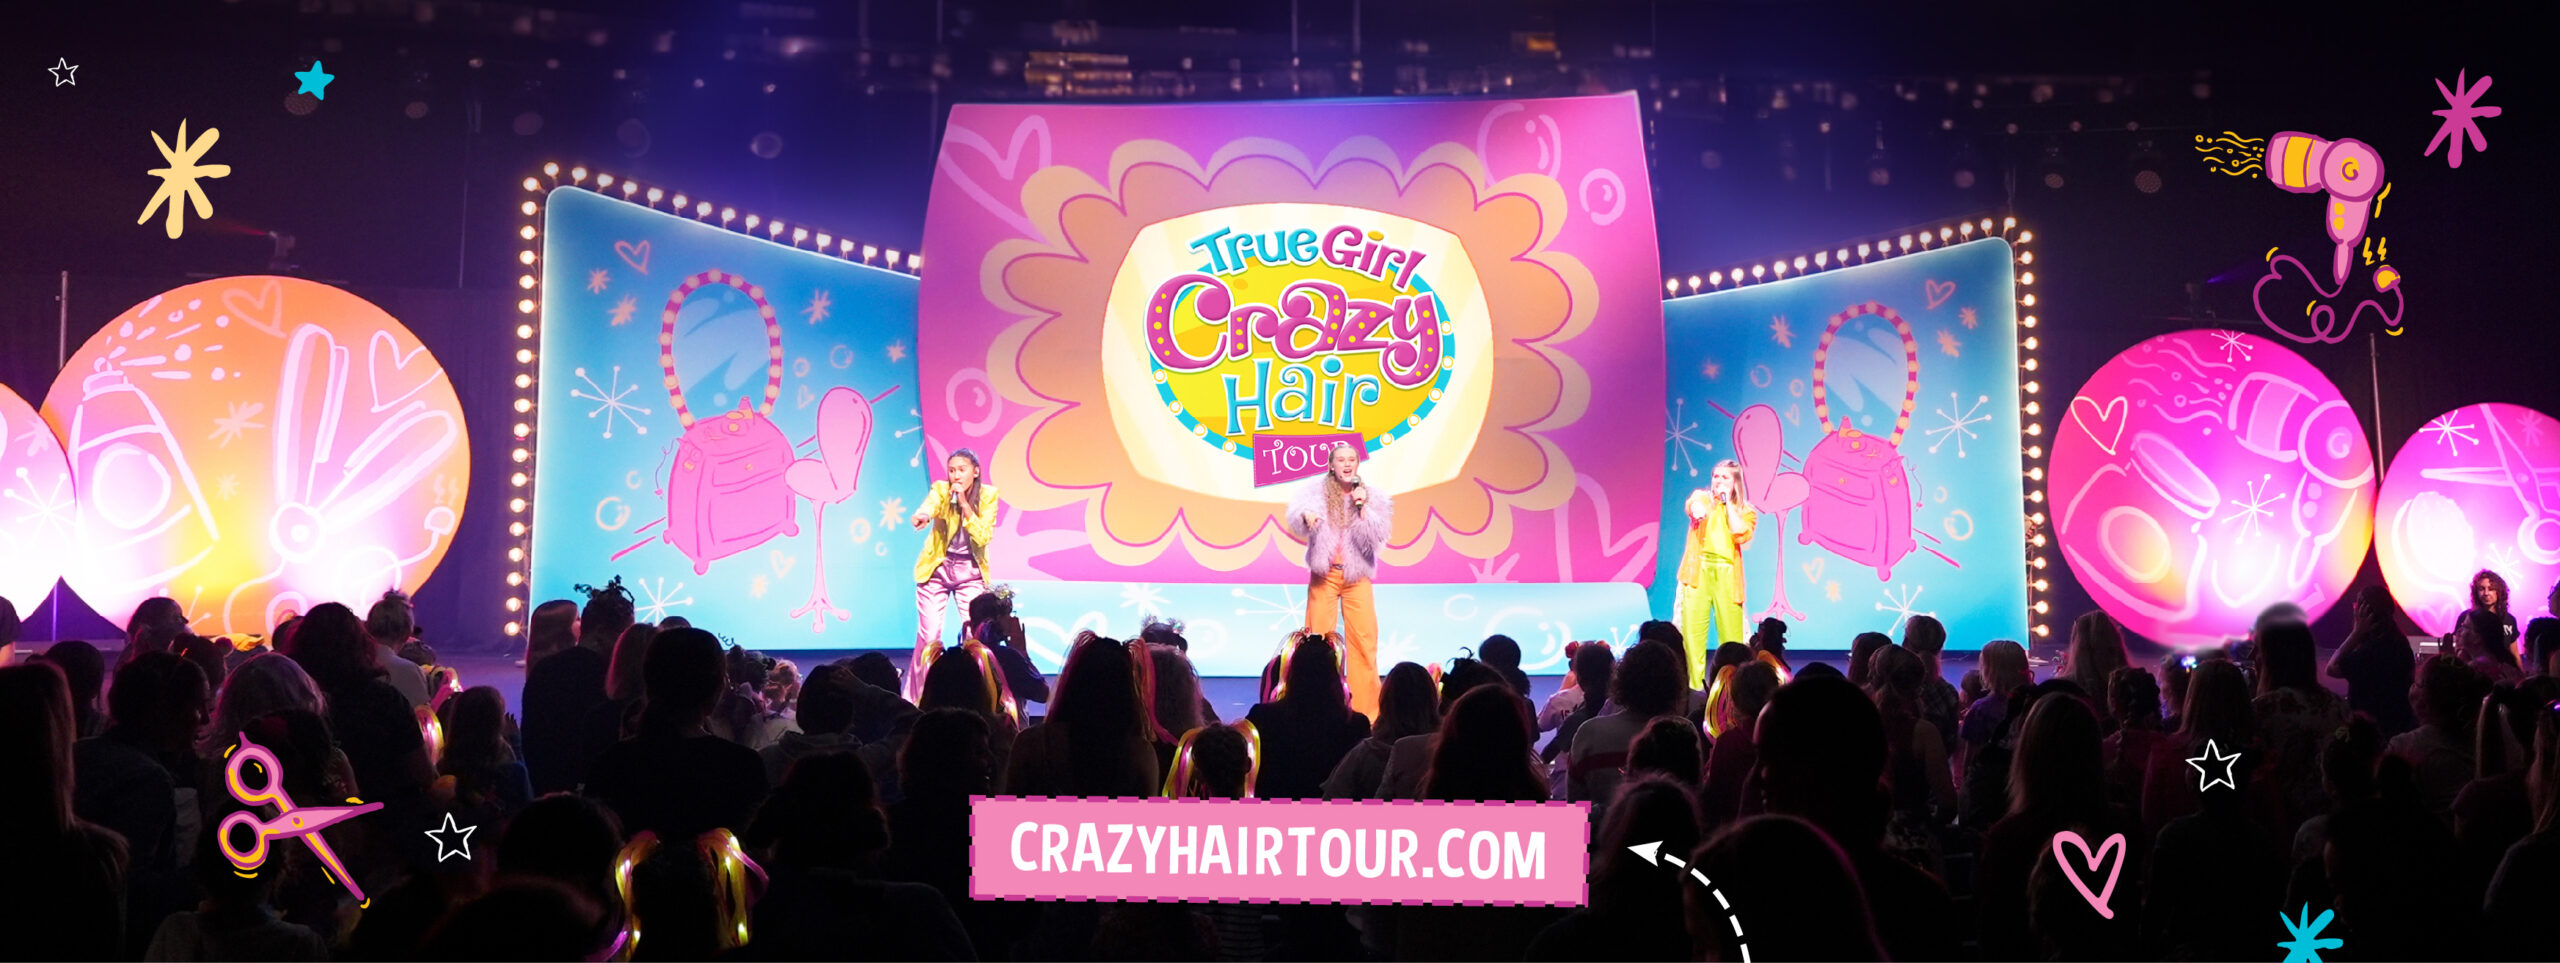 True Girl: Crazy Hair Tour presented by Cedarville University